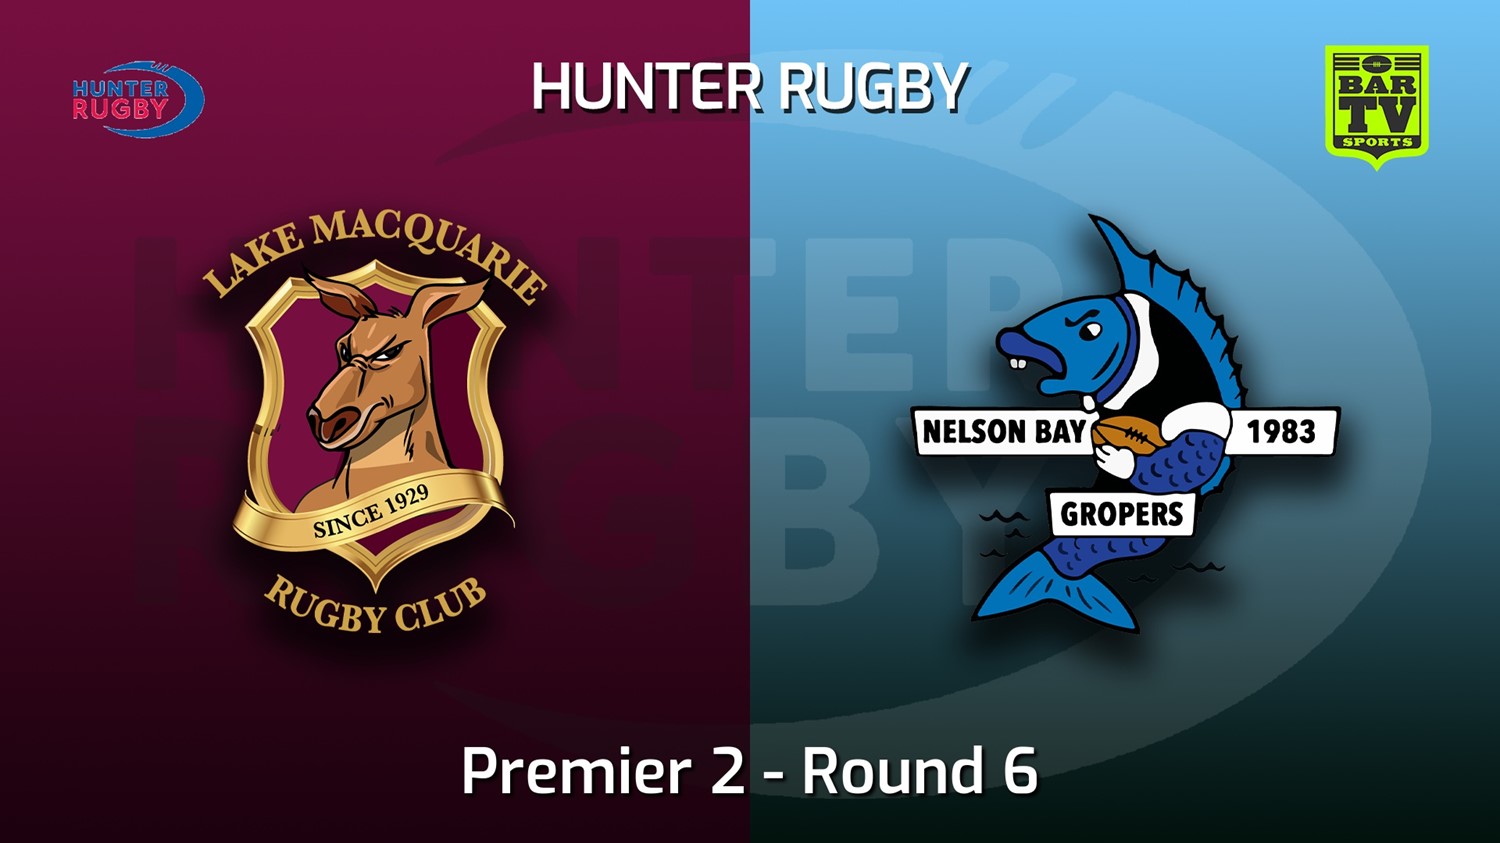 220528-Hunter Rugby Round 6 - Premier 2 - Lake Macquarie v Nelson Bay Gropers Slate Image